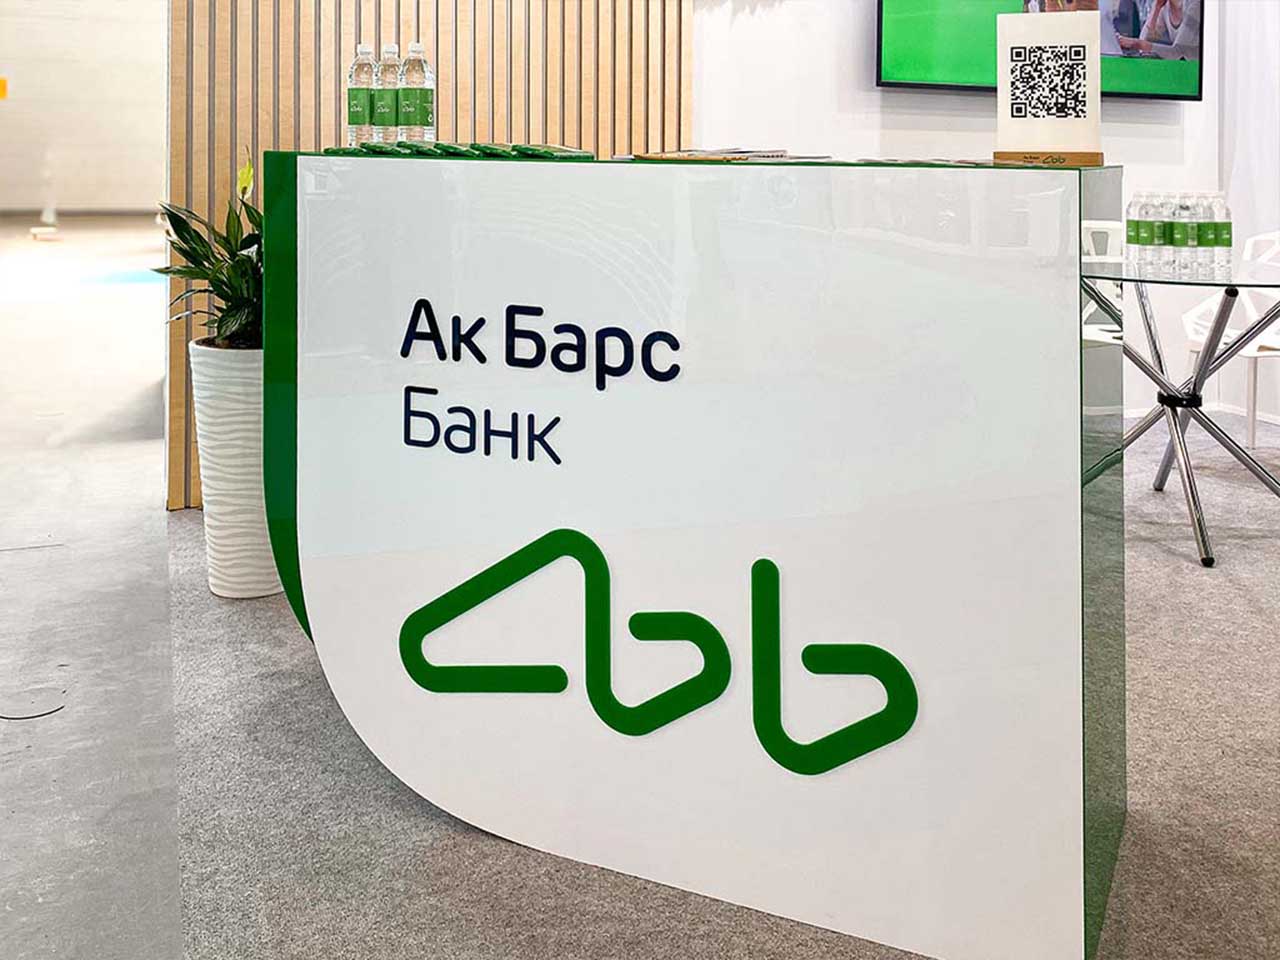 Ак барс банк новосибирск. АК Барс банк коробка. Реклама АК Барс банка. АК Барс банк высокая гора. Стикер АК Барс банк.